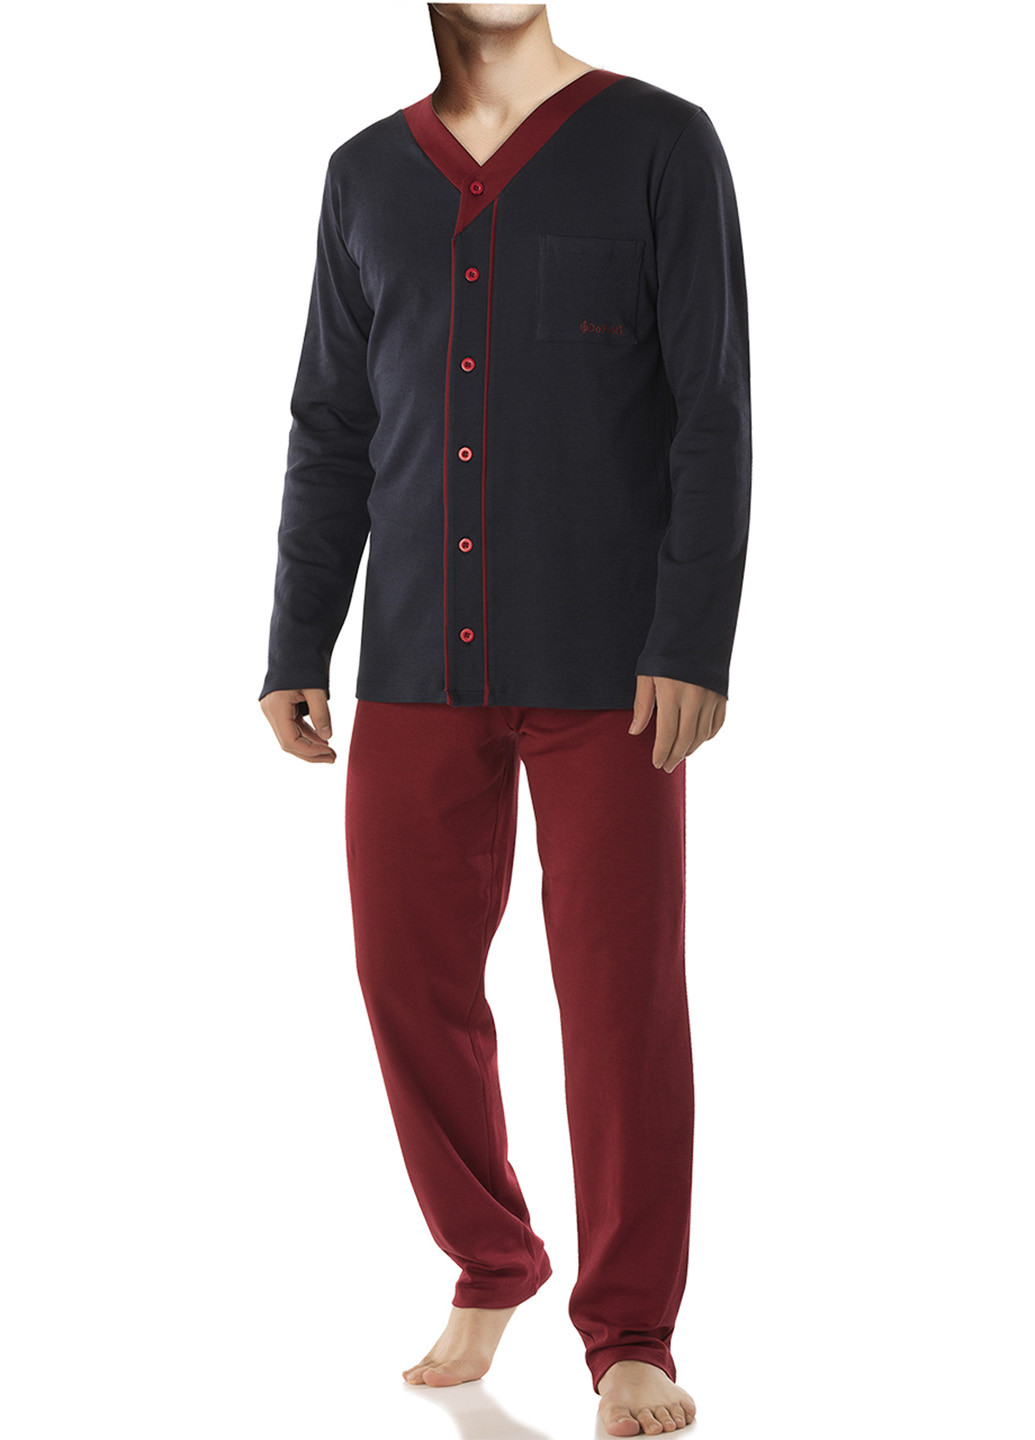 Пижама (кофта, брюки) DoReMi кофта + брюки однотонная тёмно-синяя домашняя хлопок